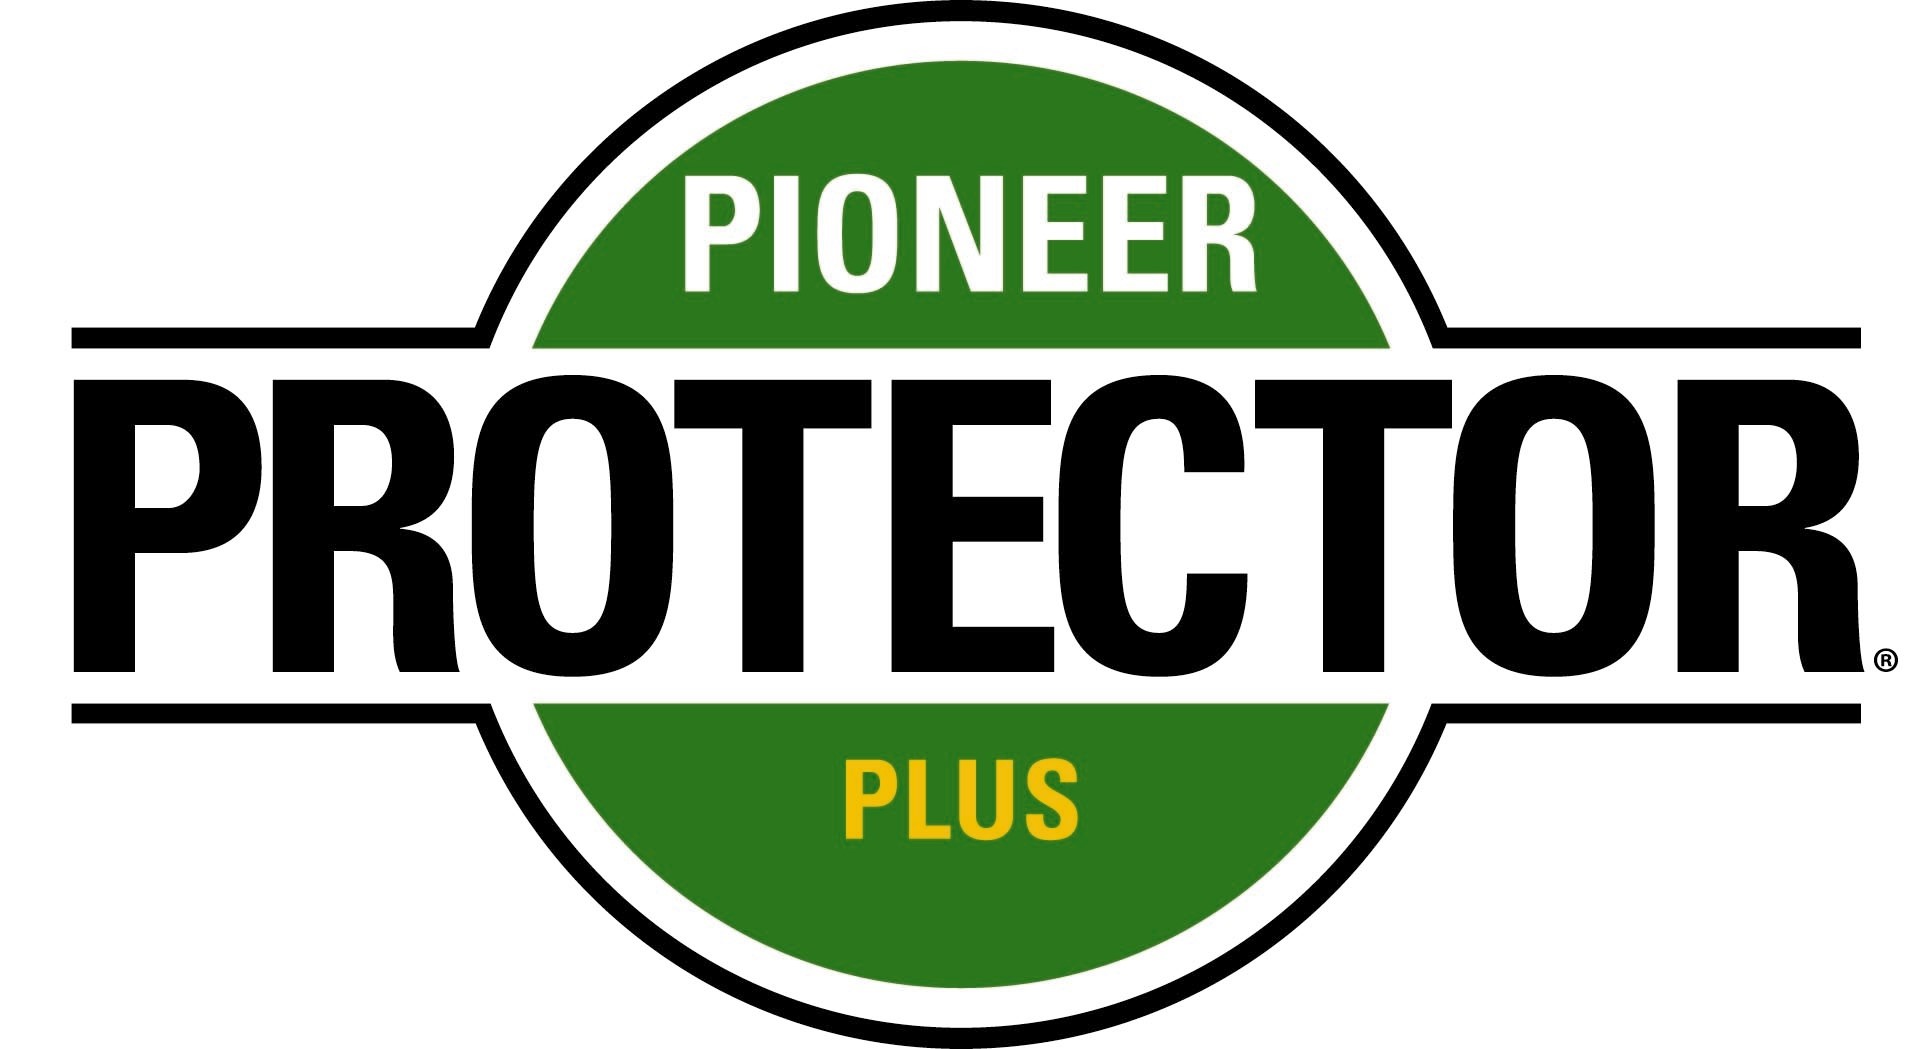 Trait > Pioneer Protector Plus